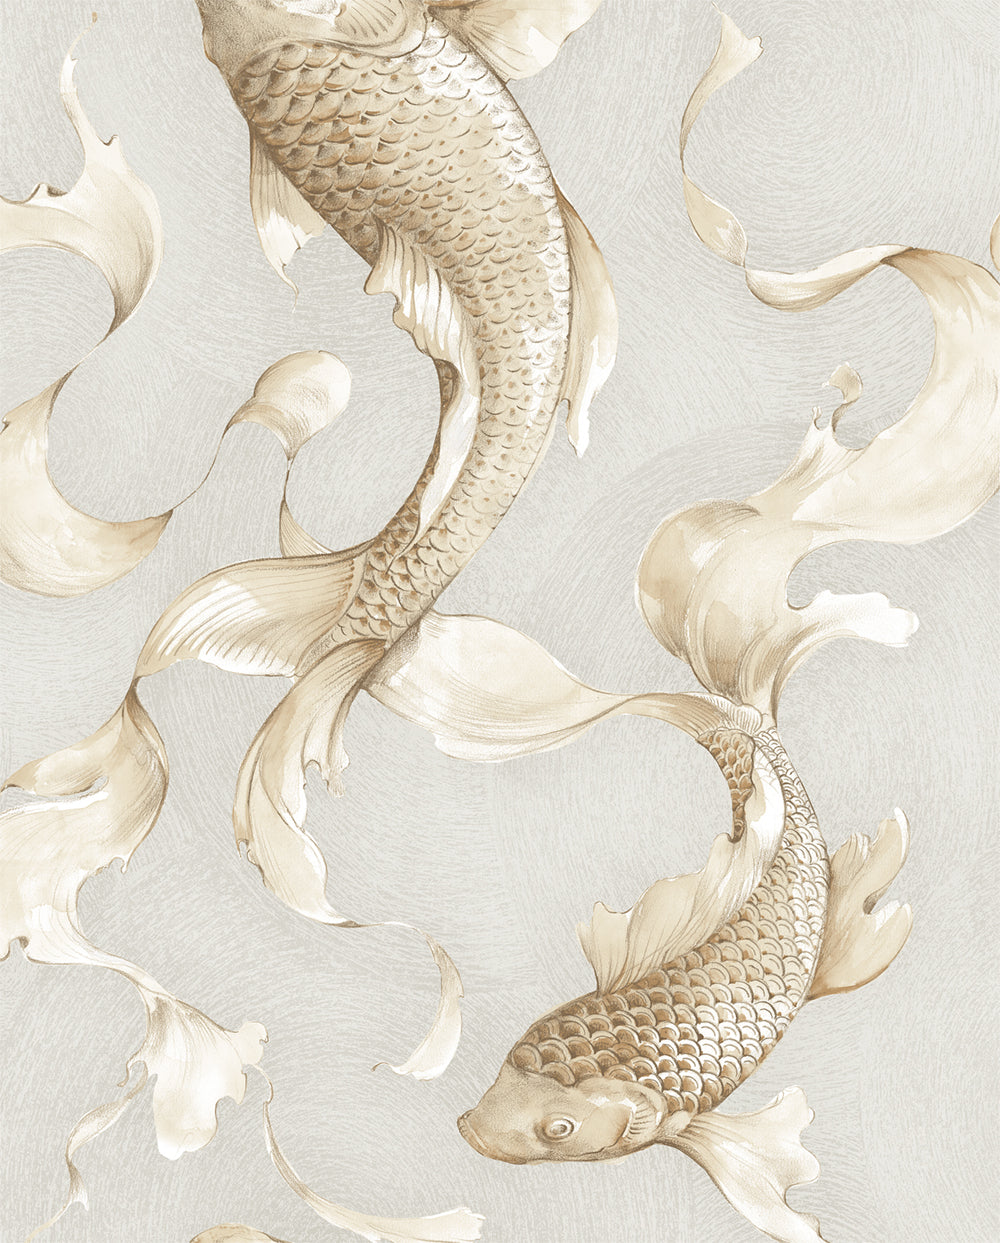 Download Koi Pond Koi Fish Wallpaper Royalty-Free Stock Illustration Image  - Pixabay